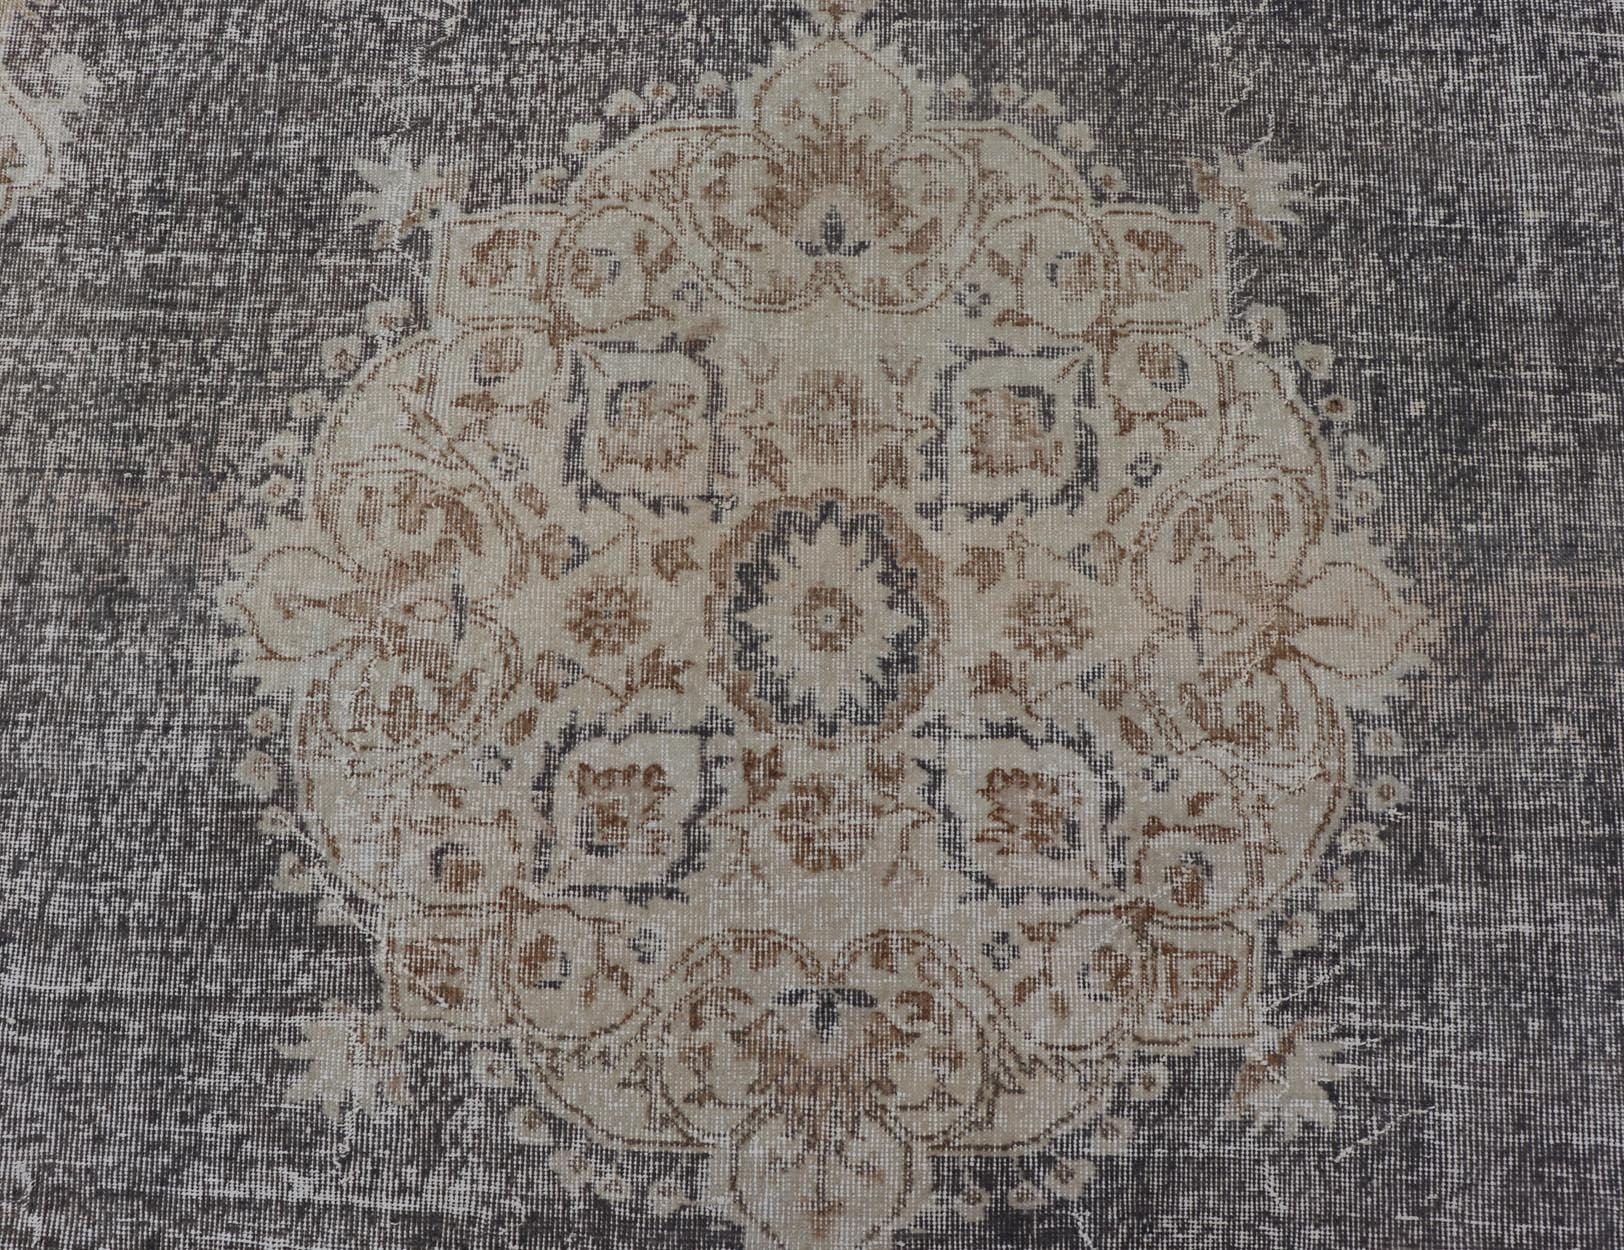 Distressed Turkish Carpet with medallion Design in Dark Gray, Lt. Brown & Cream For Sale 5